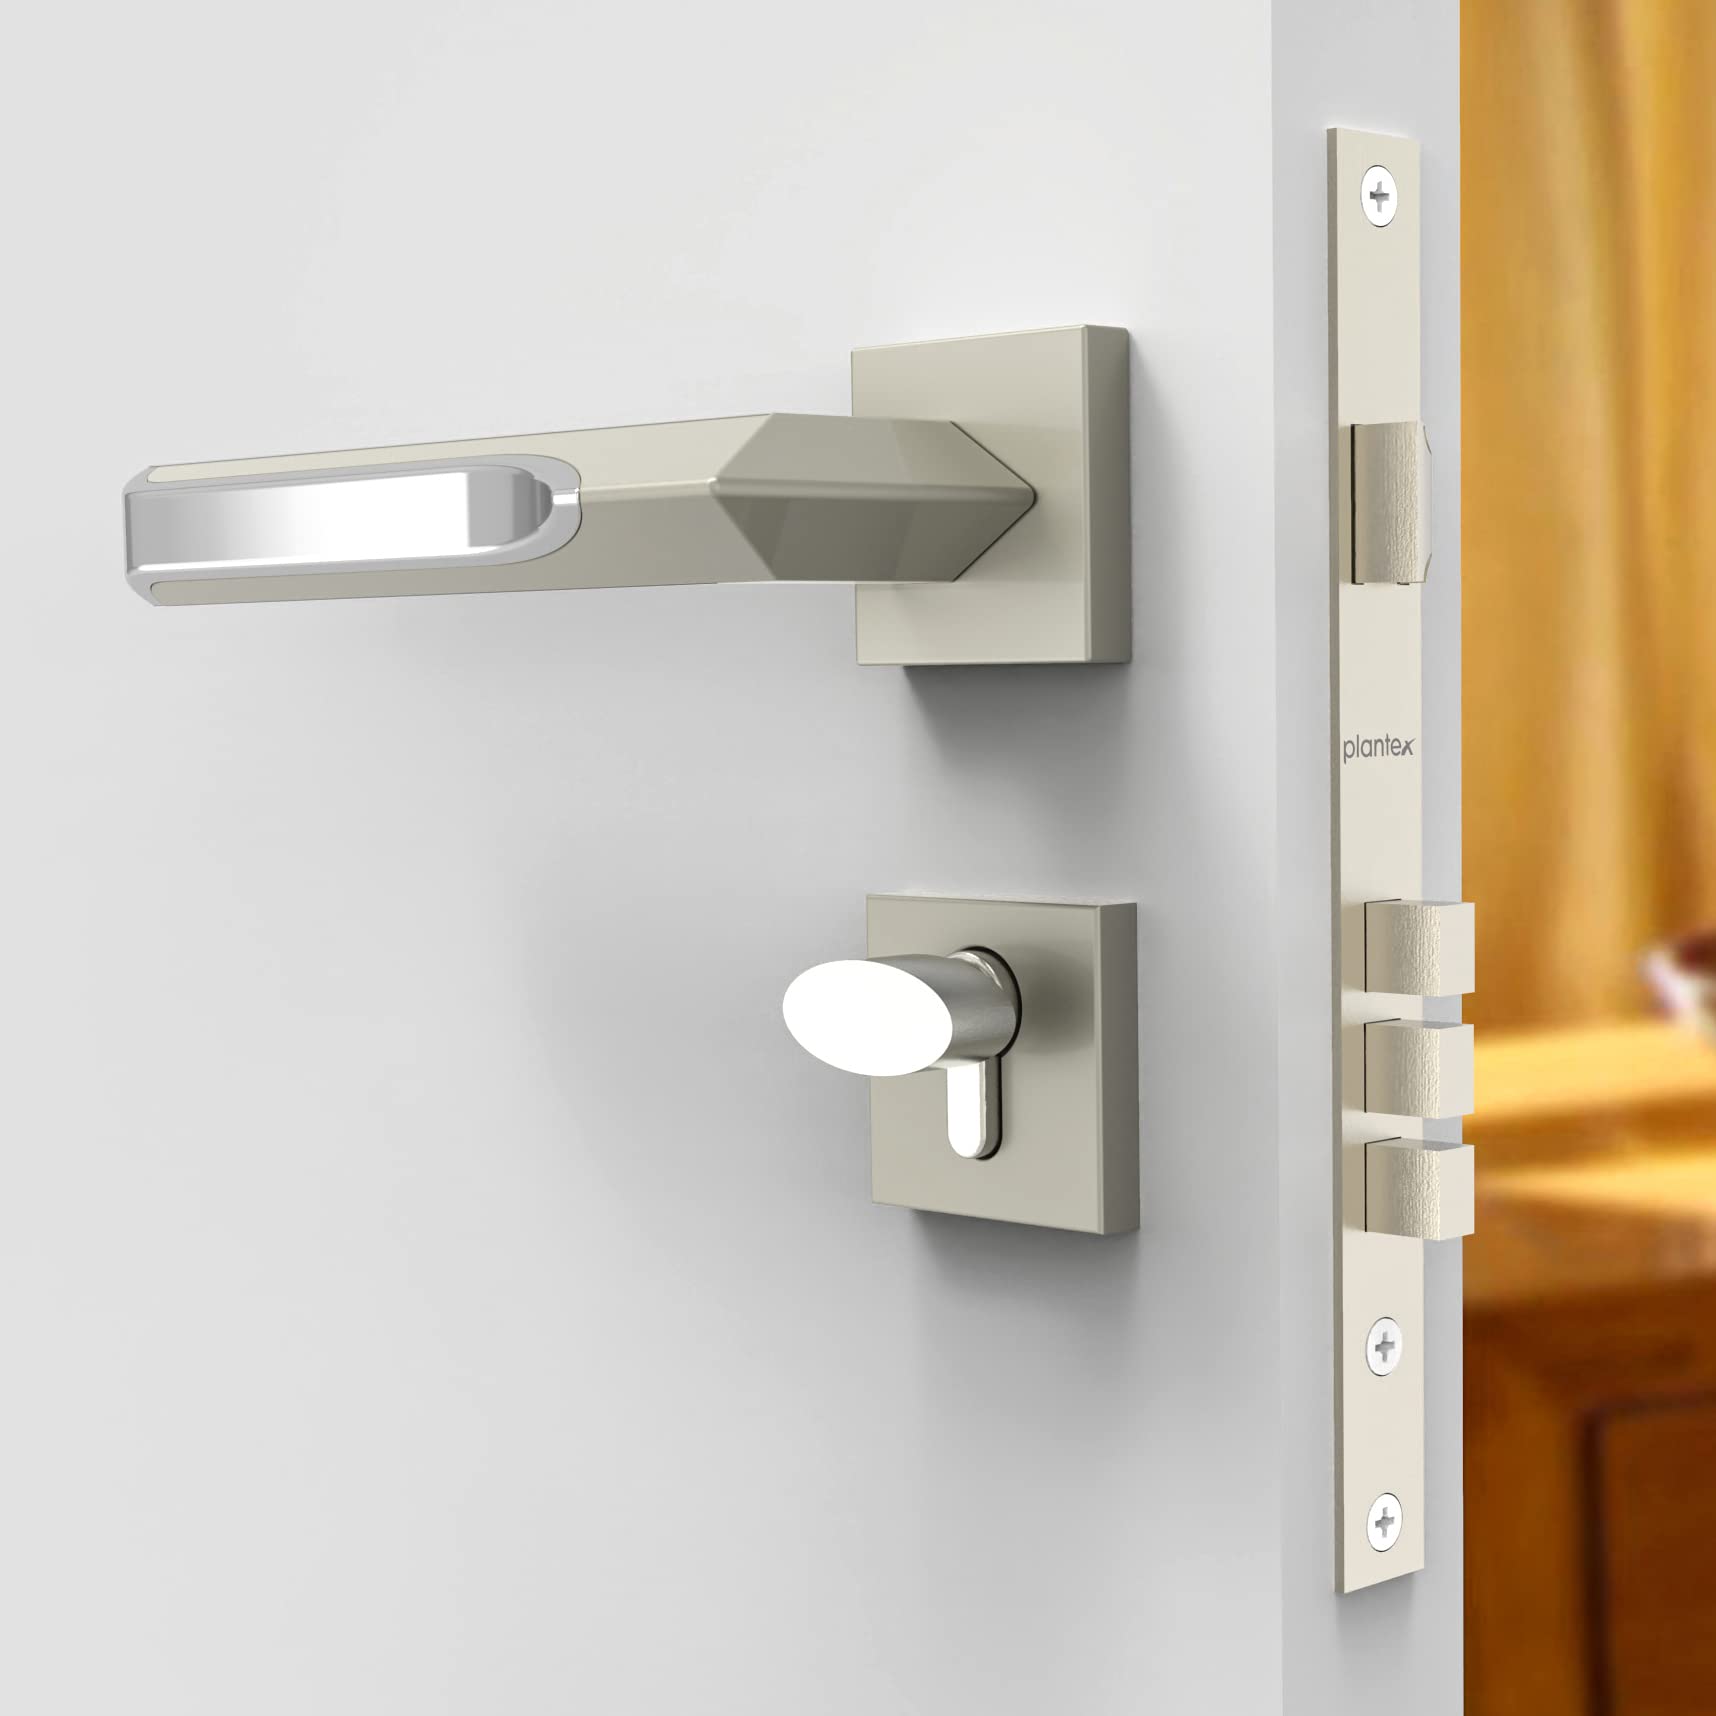 Plantex Heavy Duty Door Lock - Main Door Lock Set with 3 Keys/Mortise Door Lock for Home/Office/Hotel (7082 - Satin White & Chrome)